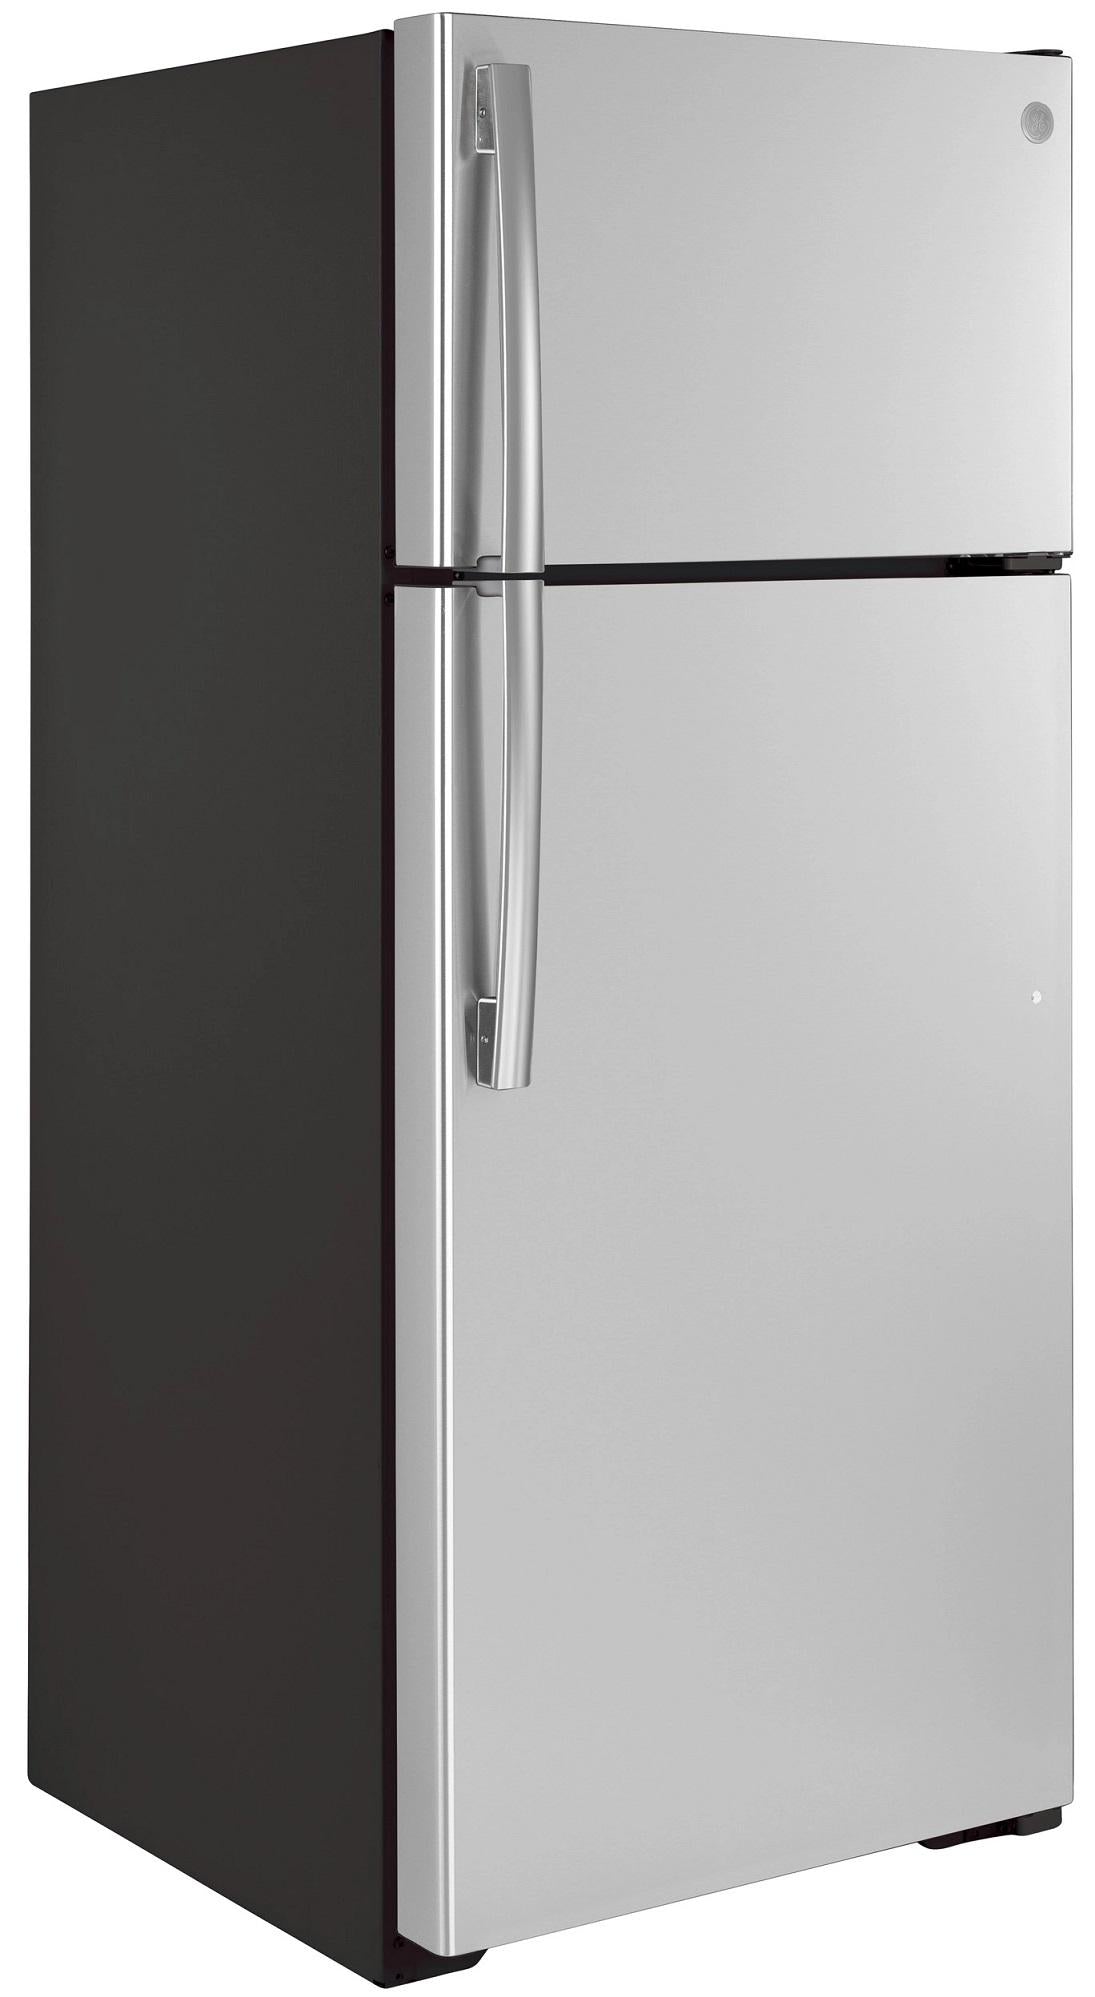 GE Appliances GTE18GSNRSS Top-Freezer Refrigerator,  17.5 Cu. Ft. with 1-Year Warranty